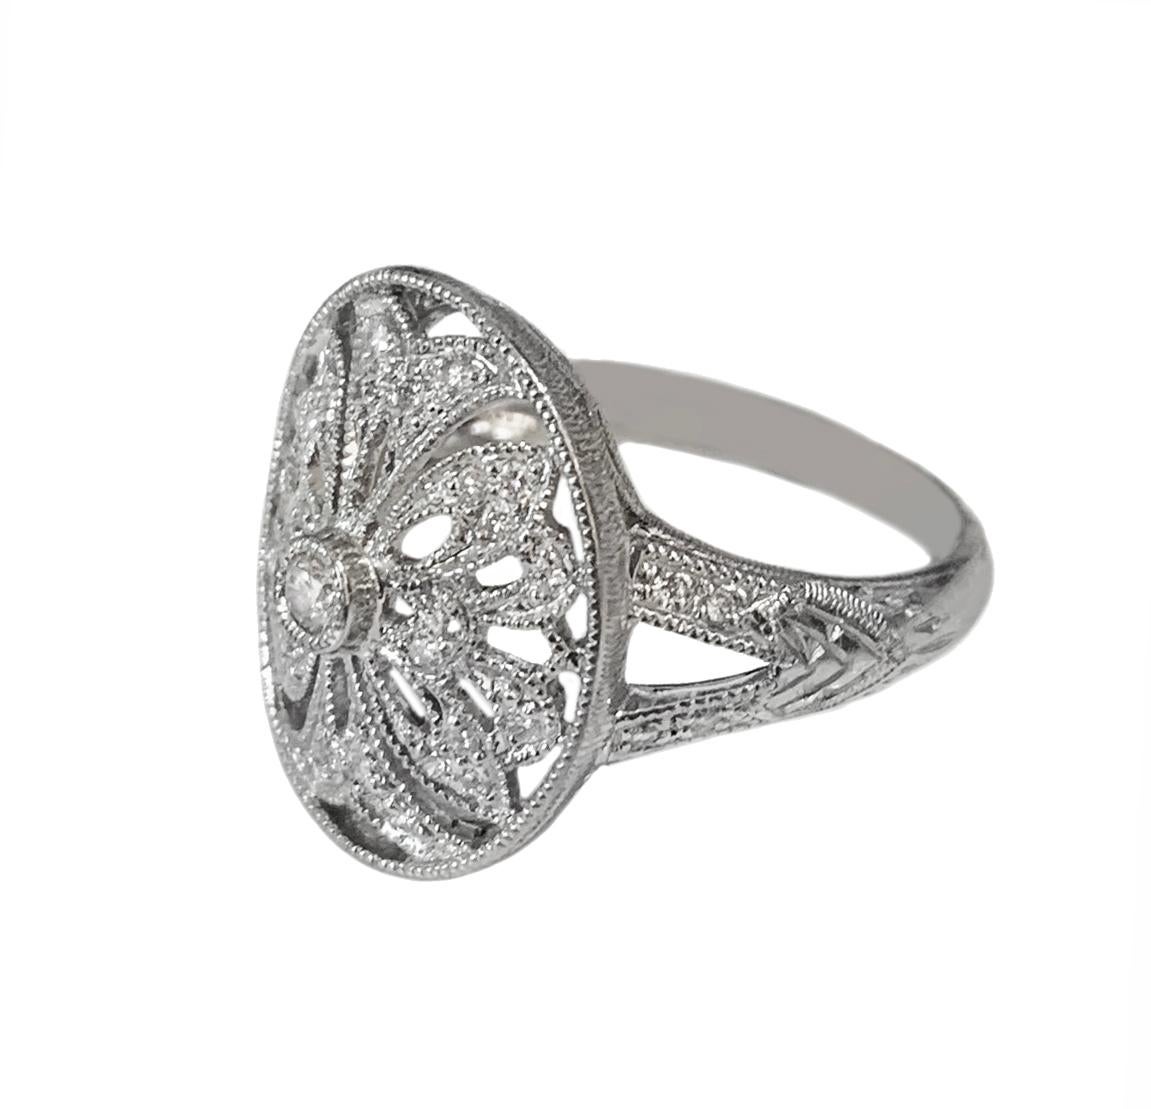 Platinum
Ring size: 6.5
Dimension: 14x17mm
Diamonds: 0.26ct, VS/G